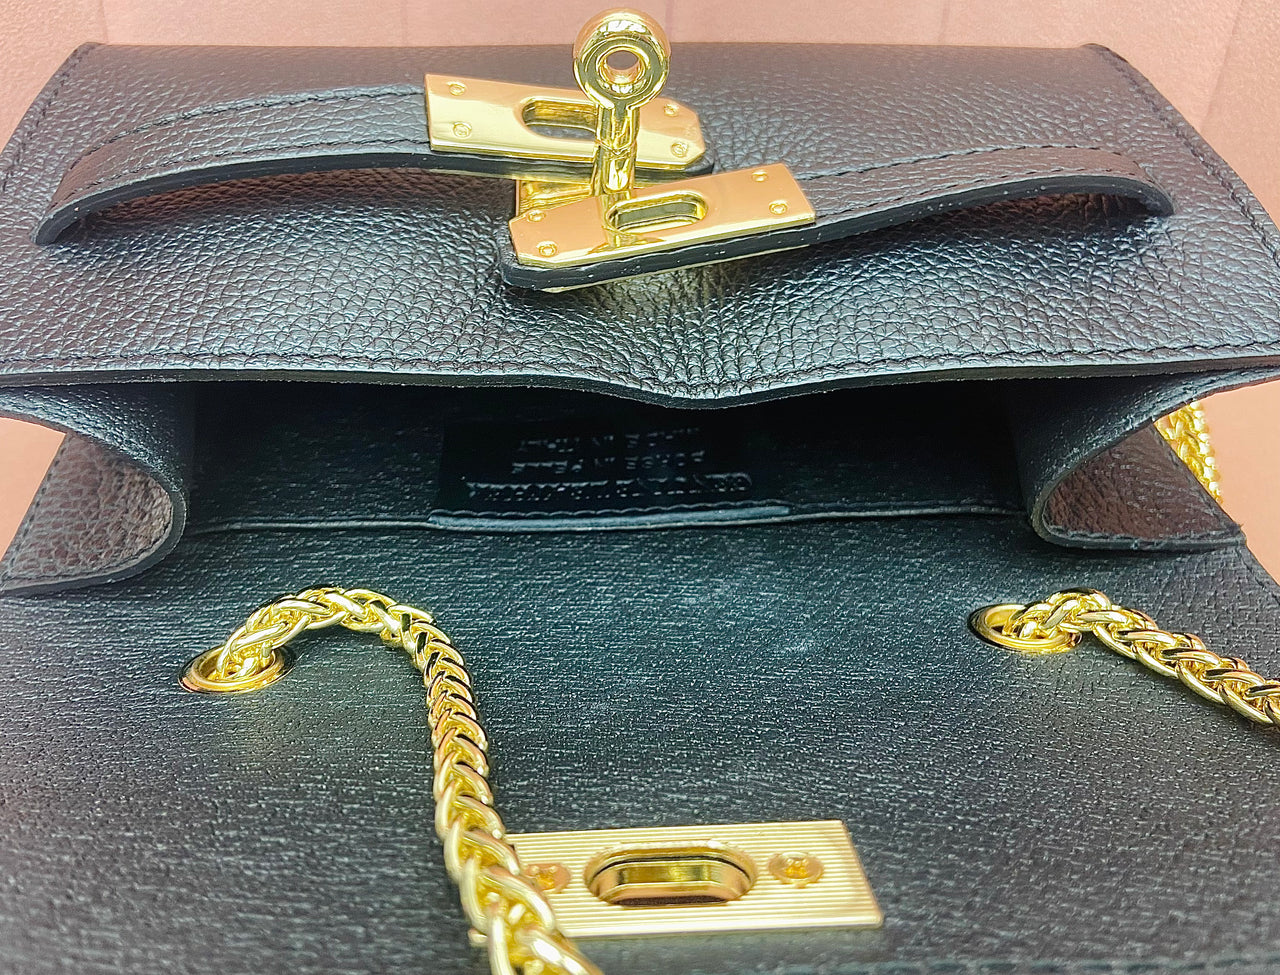 luxe crossbody purse